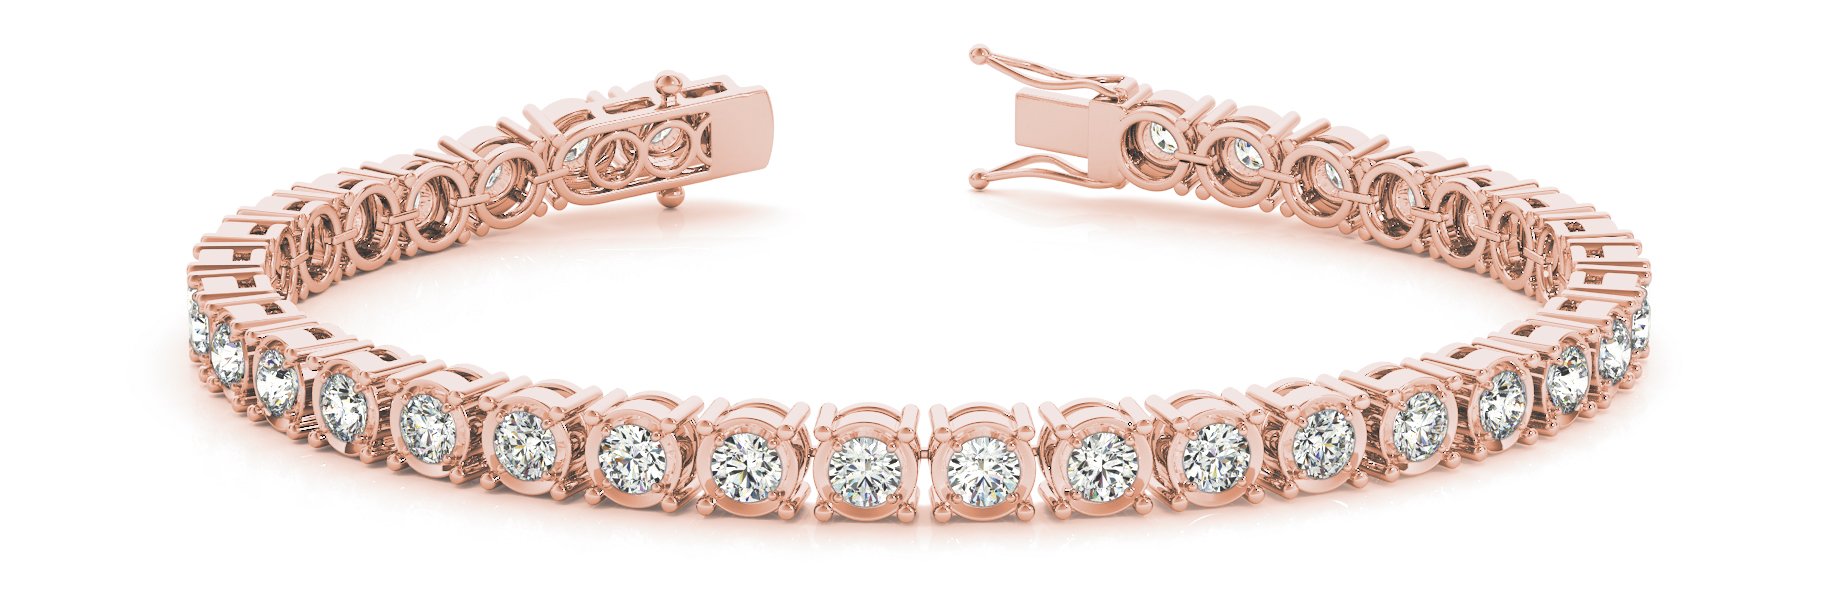 Fancy Diamond Bracelet Ladies 3.74ct tw - 14kt Rose Gold